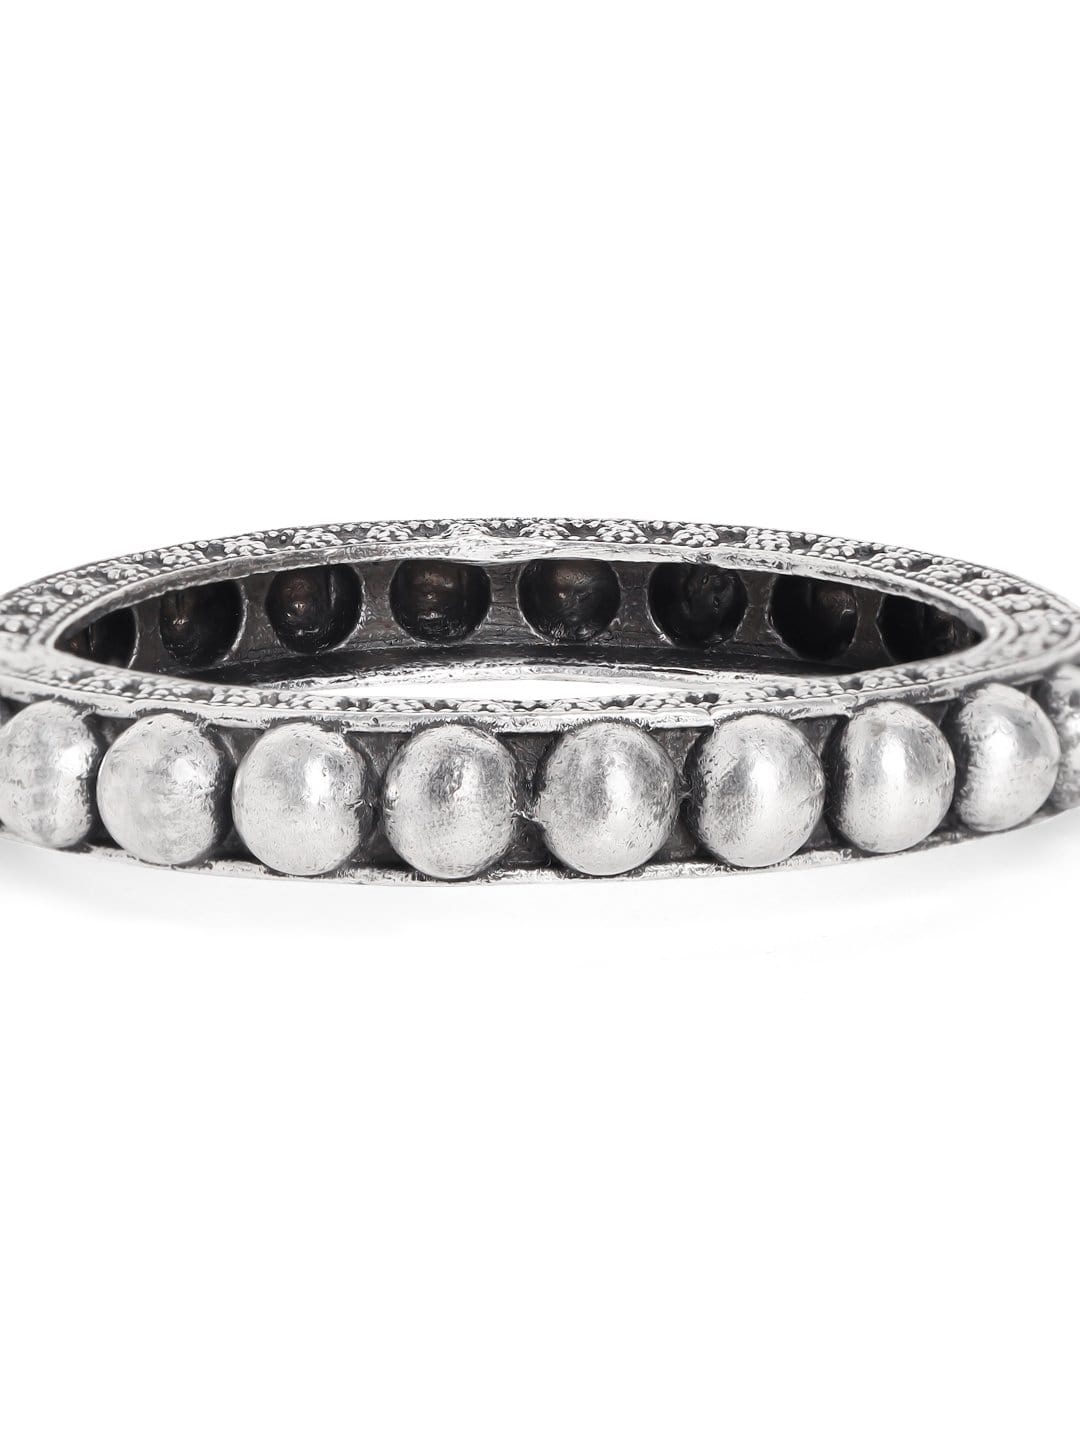 Rubans Oxidised Filigree Silver Plated Handcrafted Bracelet Bangles & Bracelets